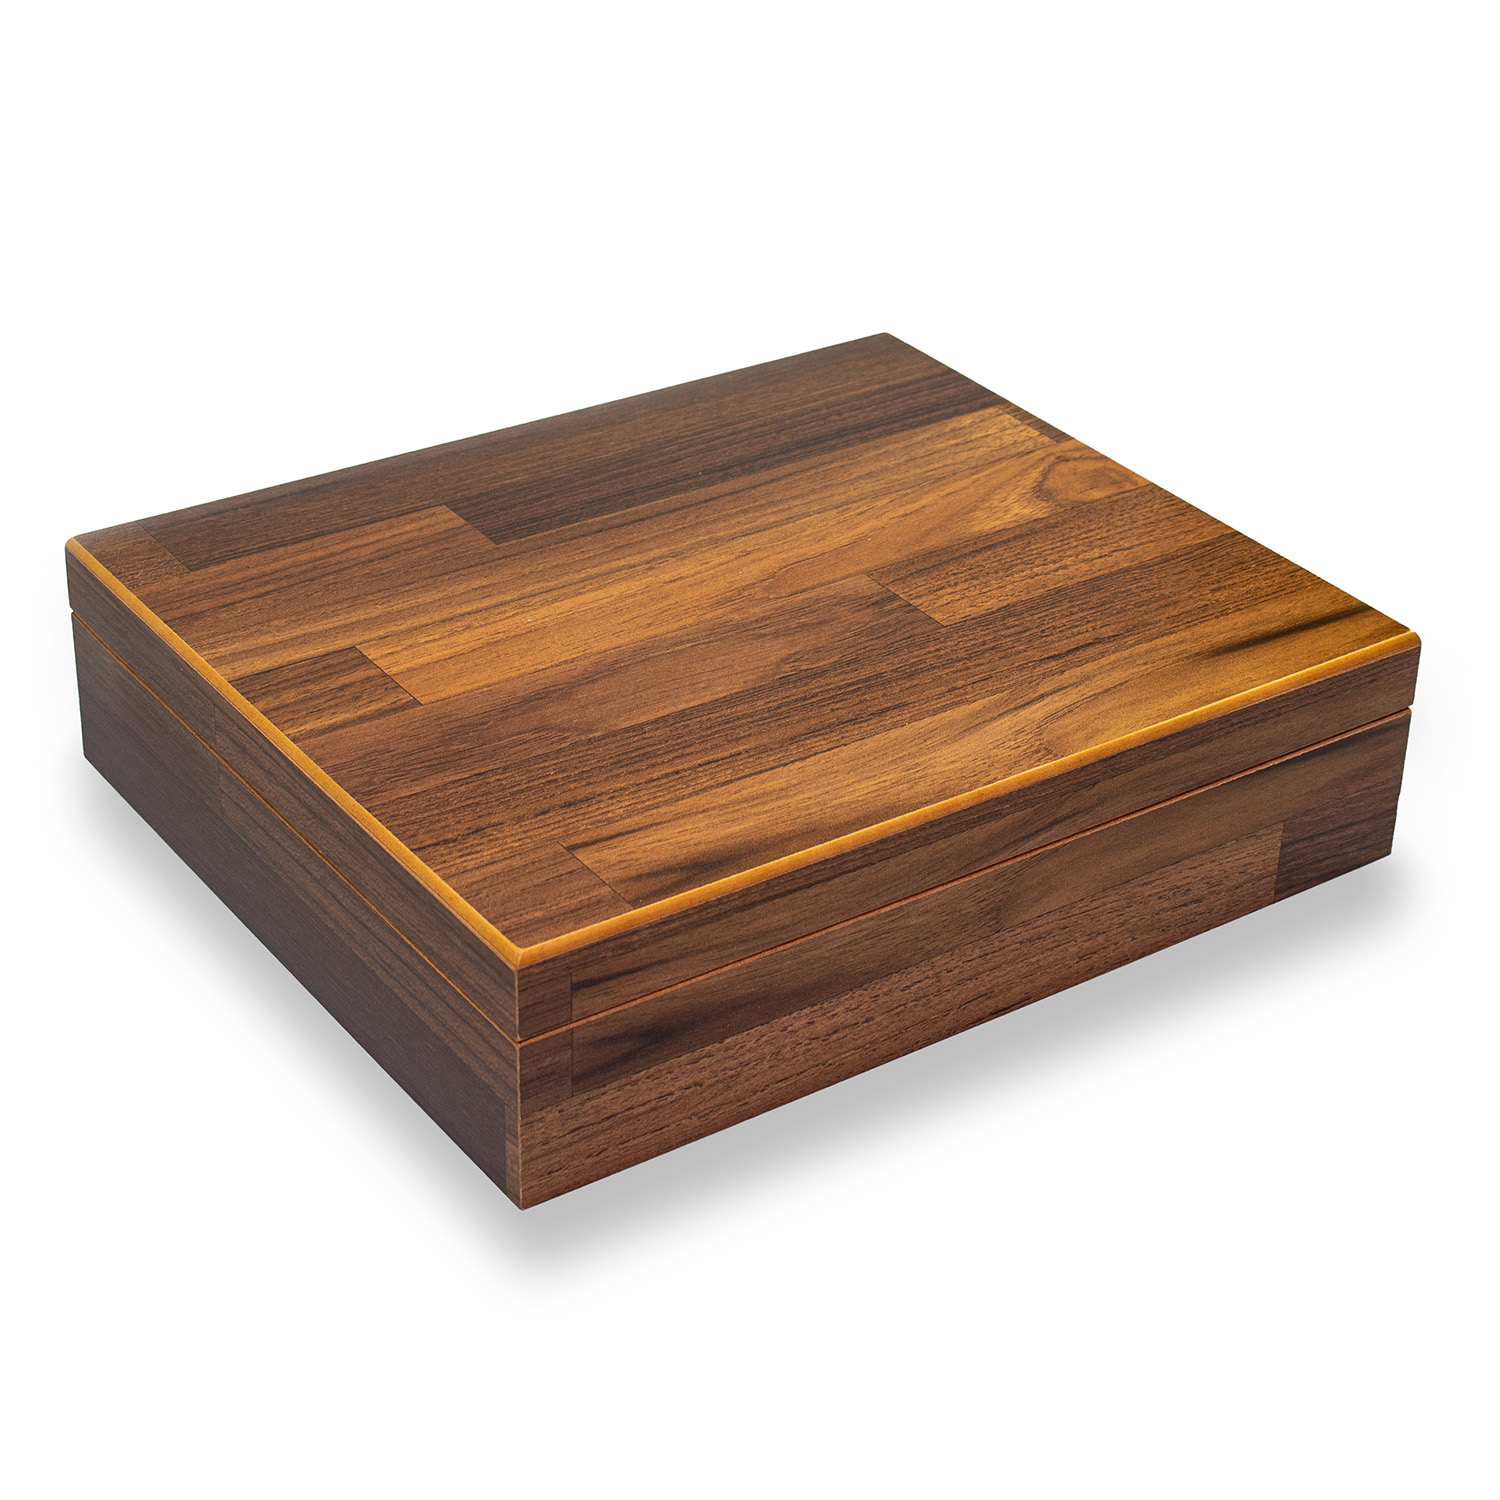 Humidor set brown wood texture